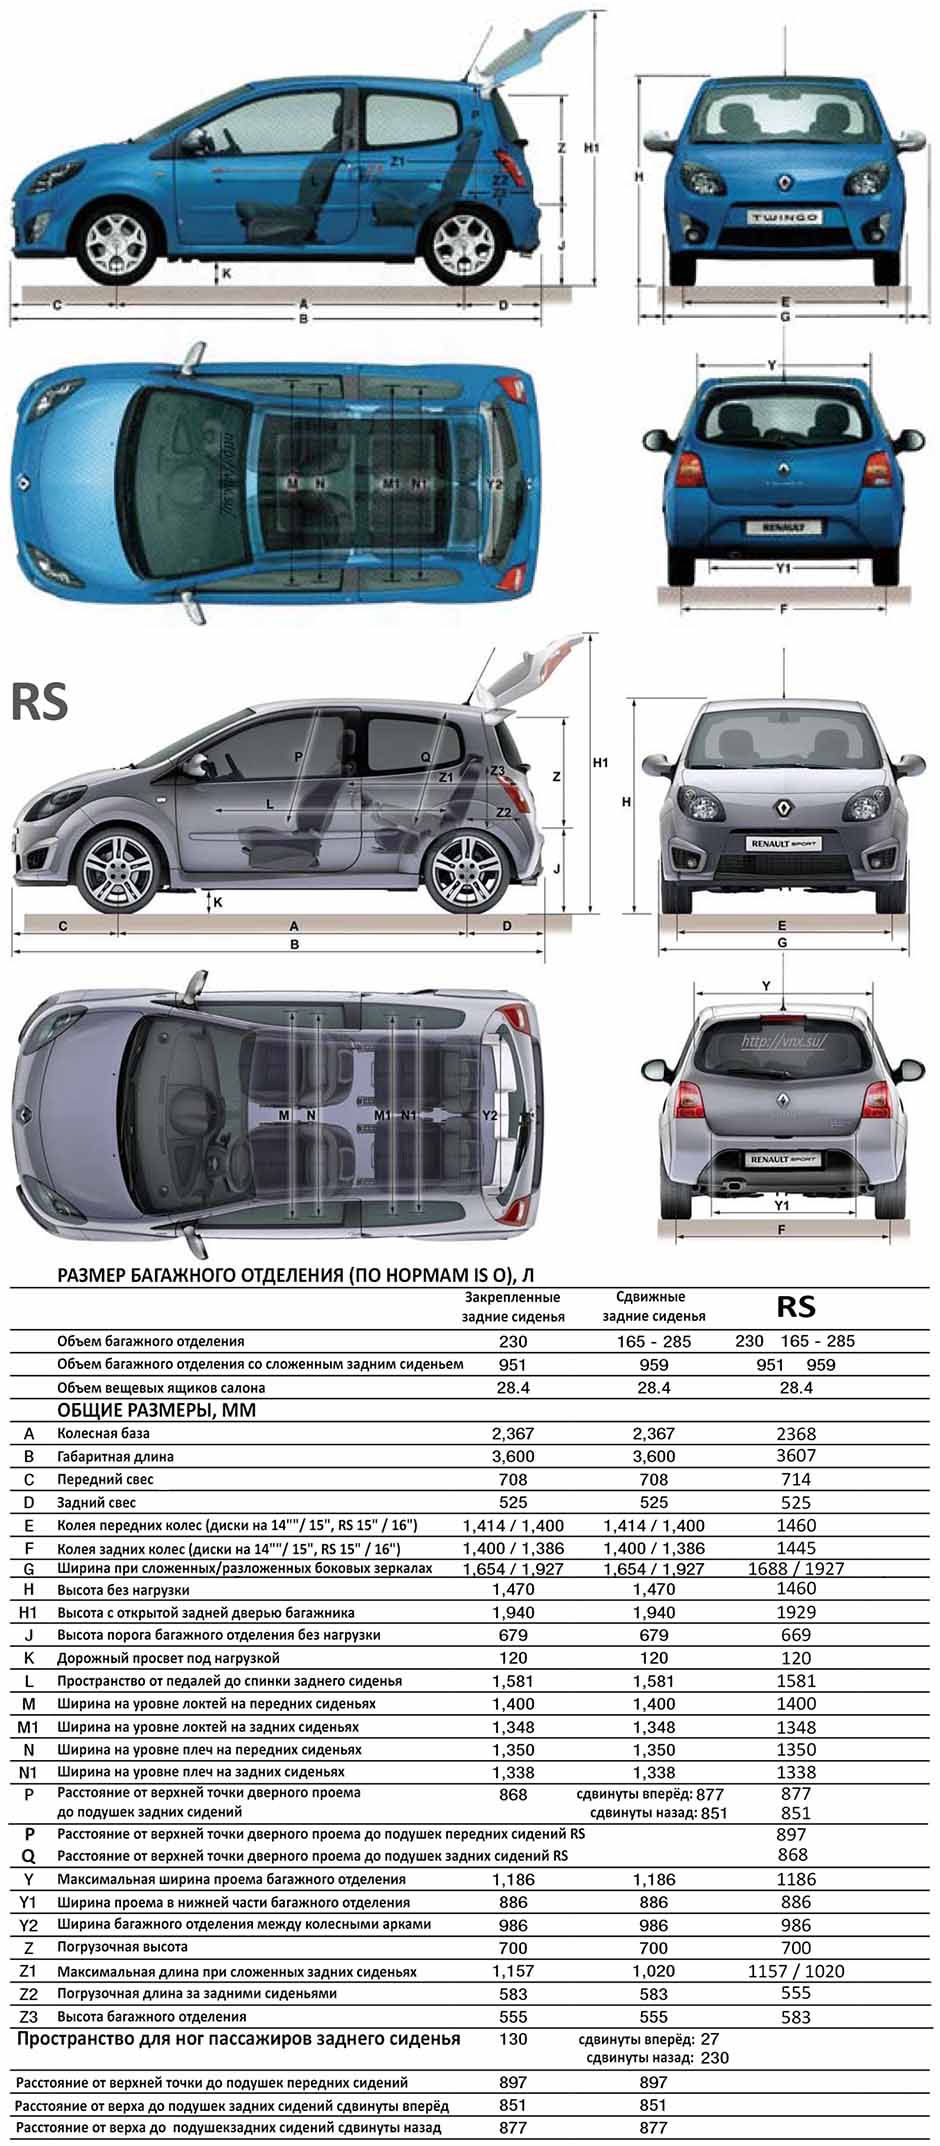 Габаритные размеры Рено Твинго 2 РС 2007-2013 (dimensions Renault Twingo RS Mark II)